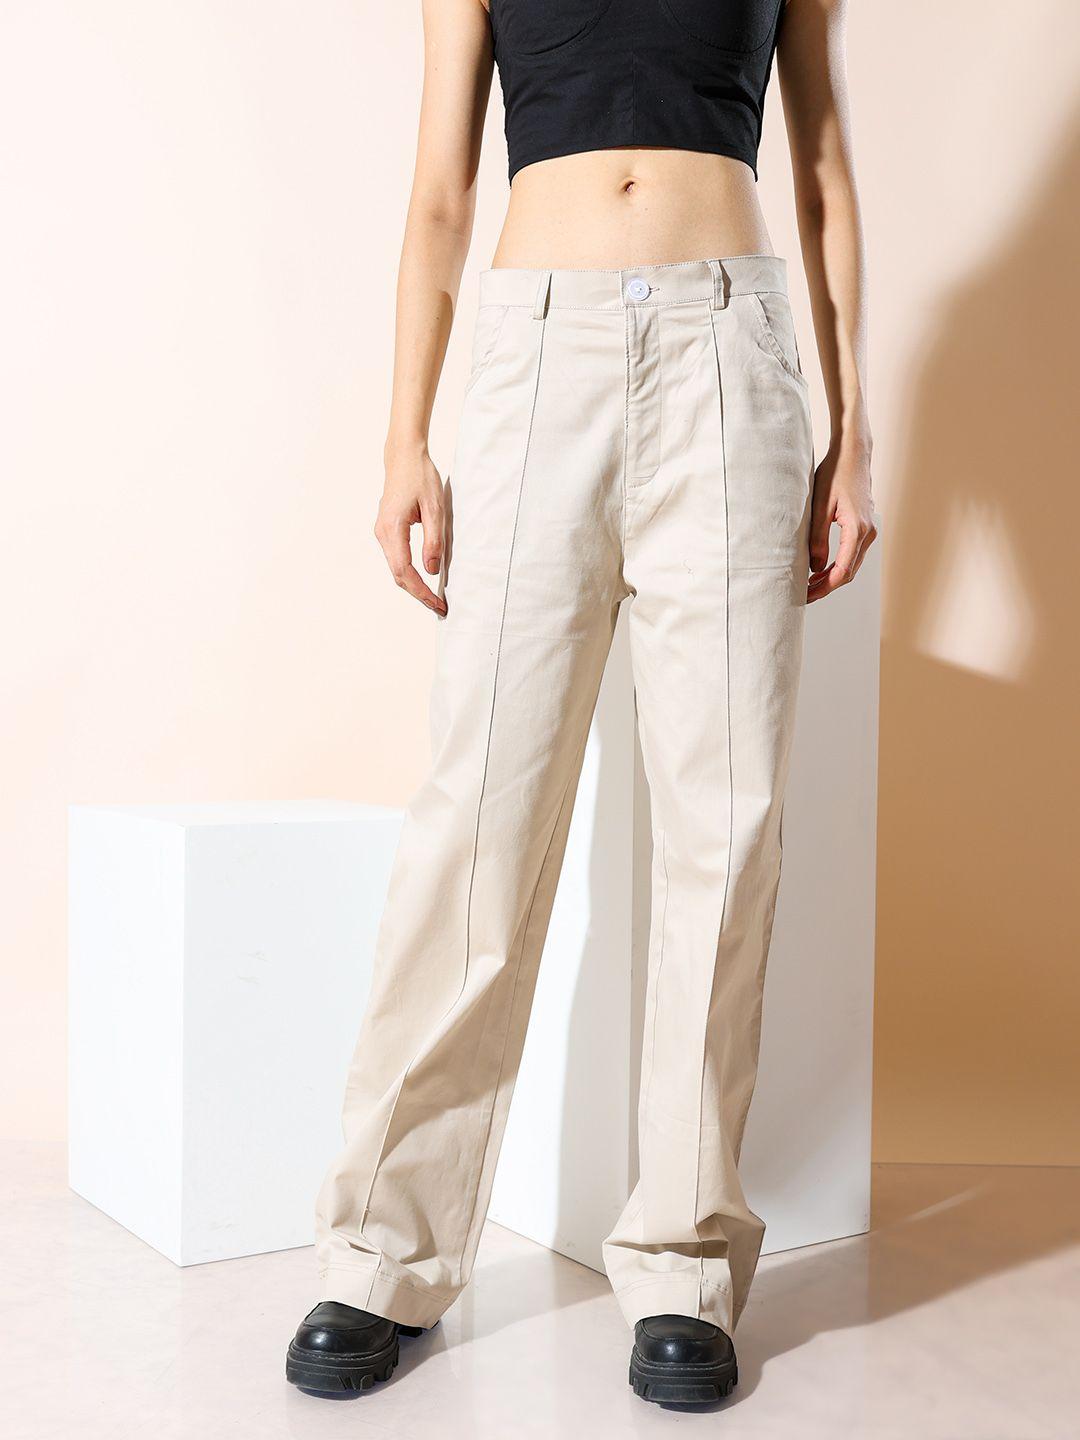 stylecast-x-hersheinbox-women-pintuck-trousers